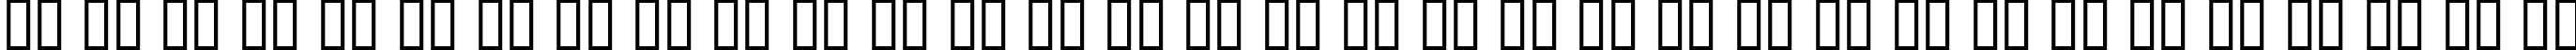 Пример написания русского алфавита шрифтом Dali